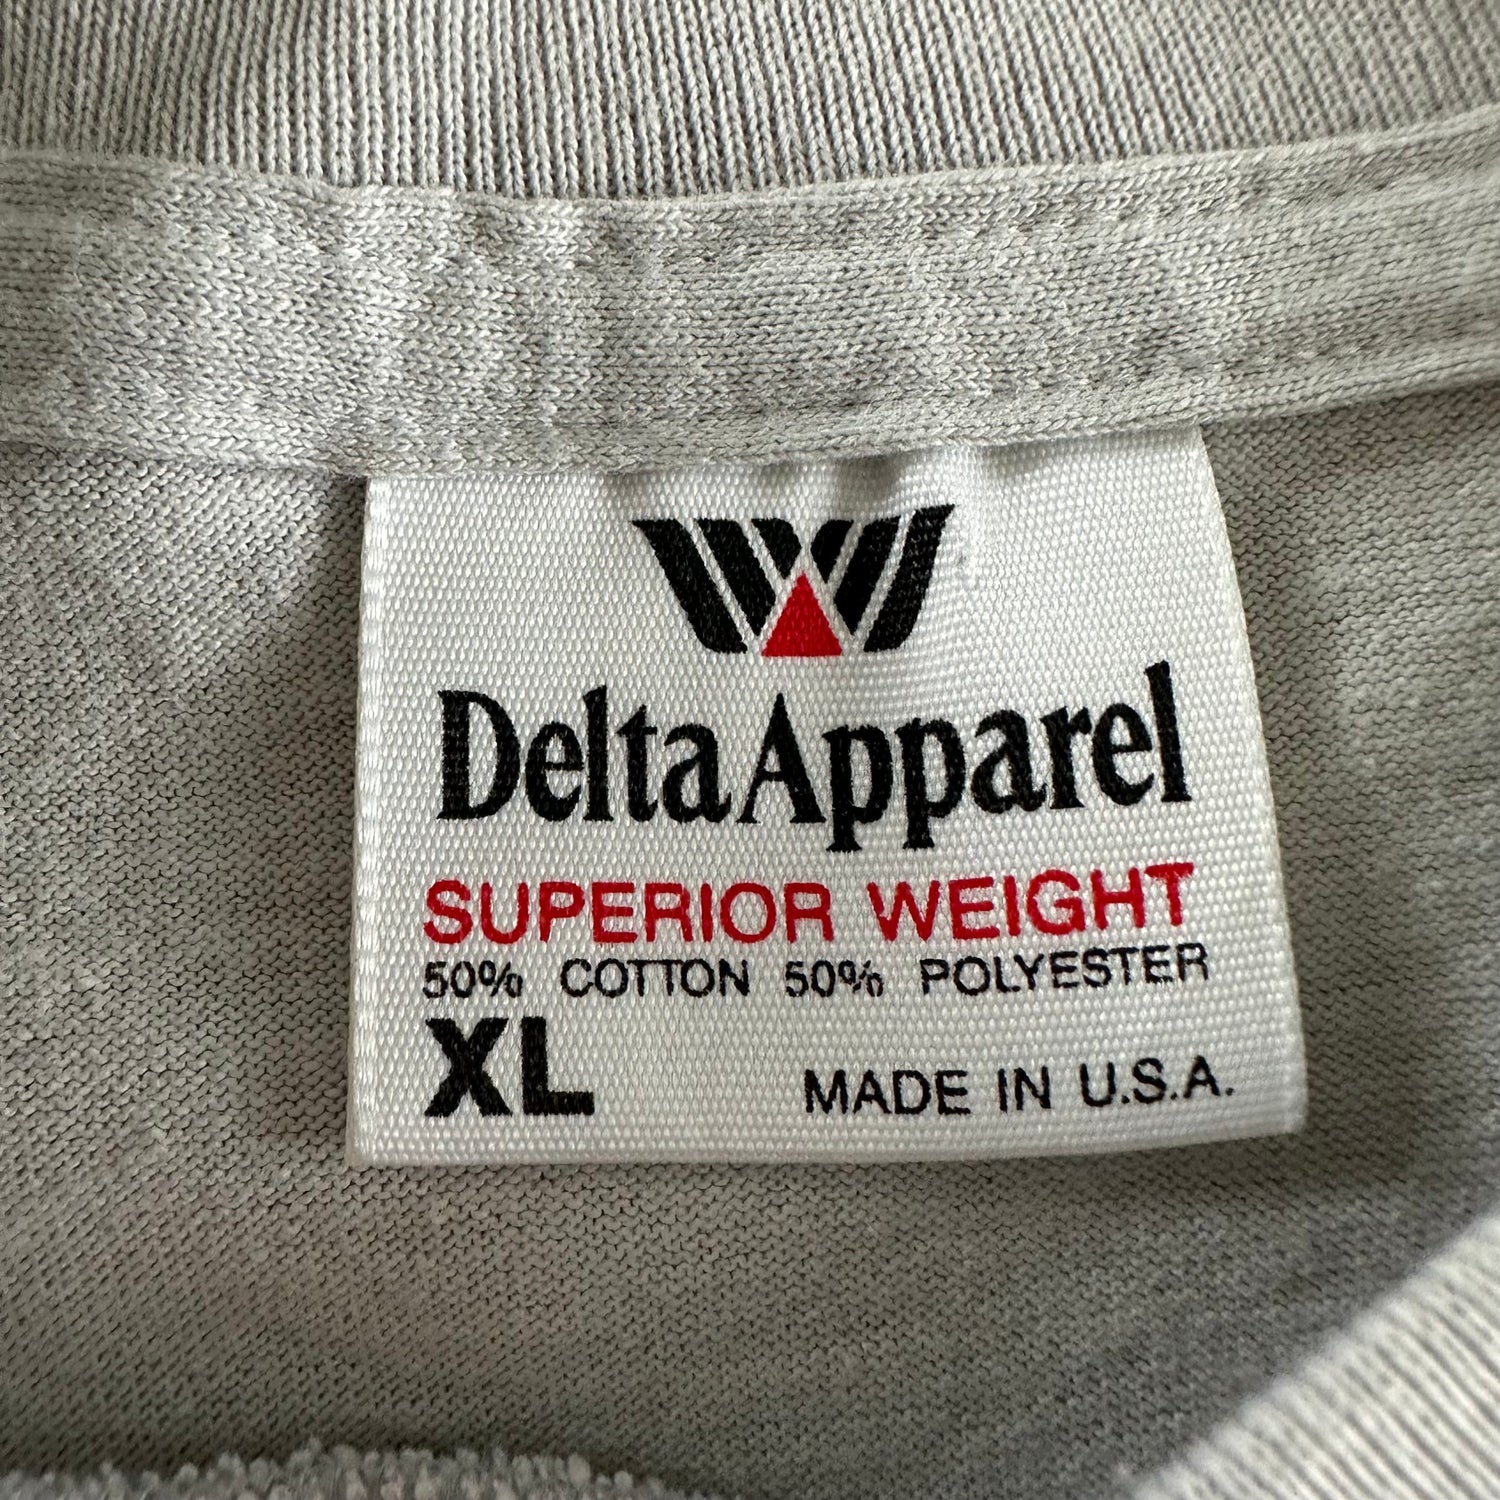 Vintage 1989 Virginia T-shirt size XL